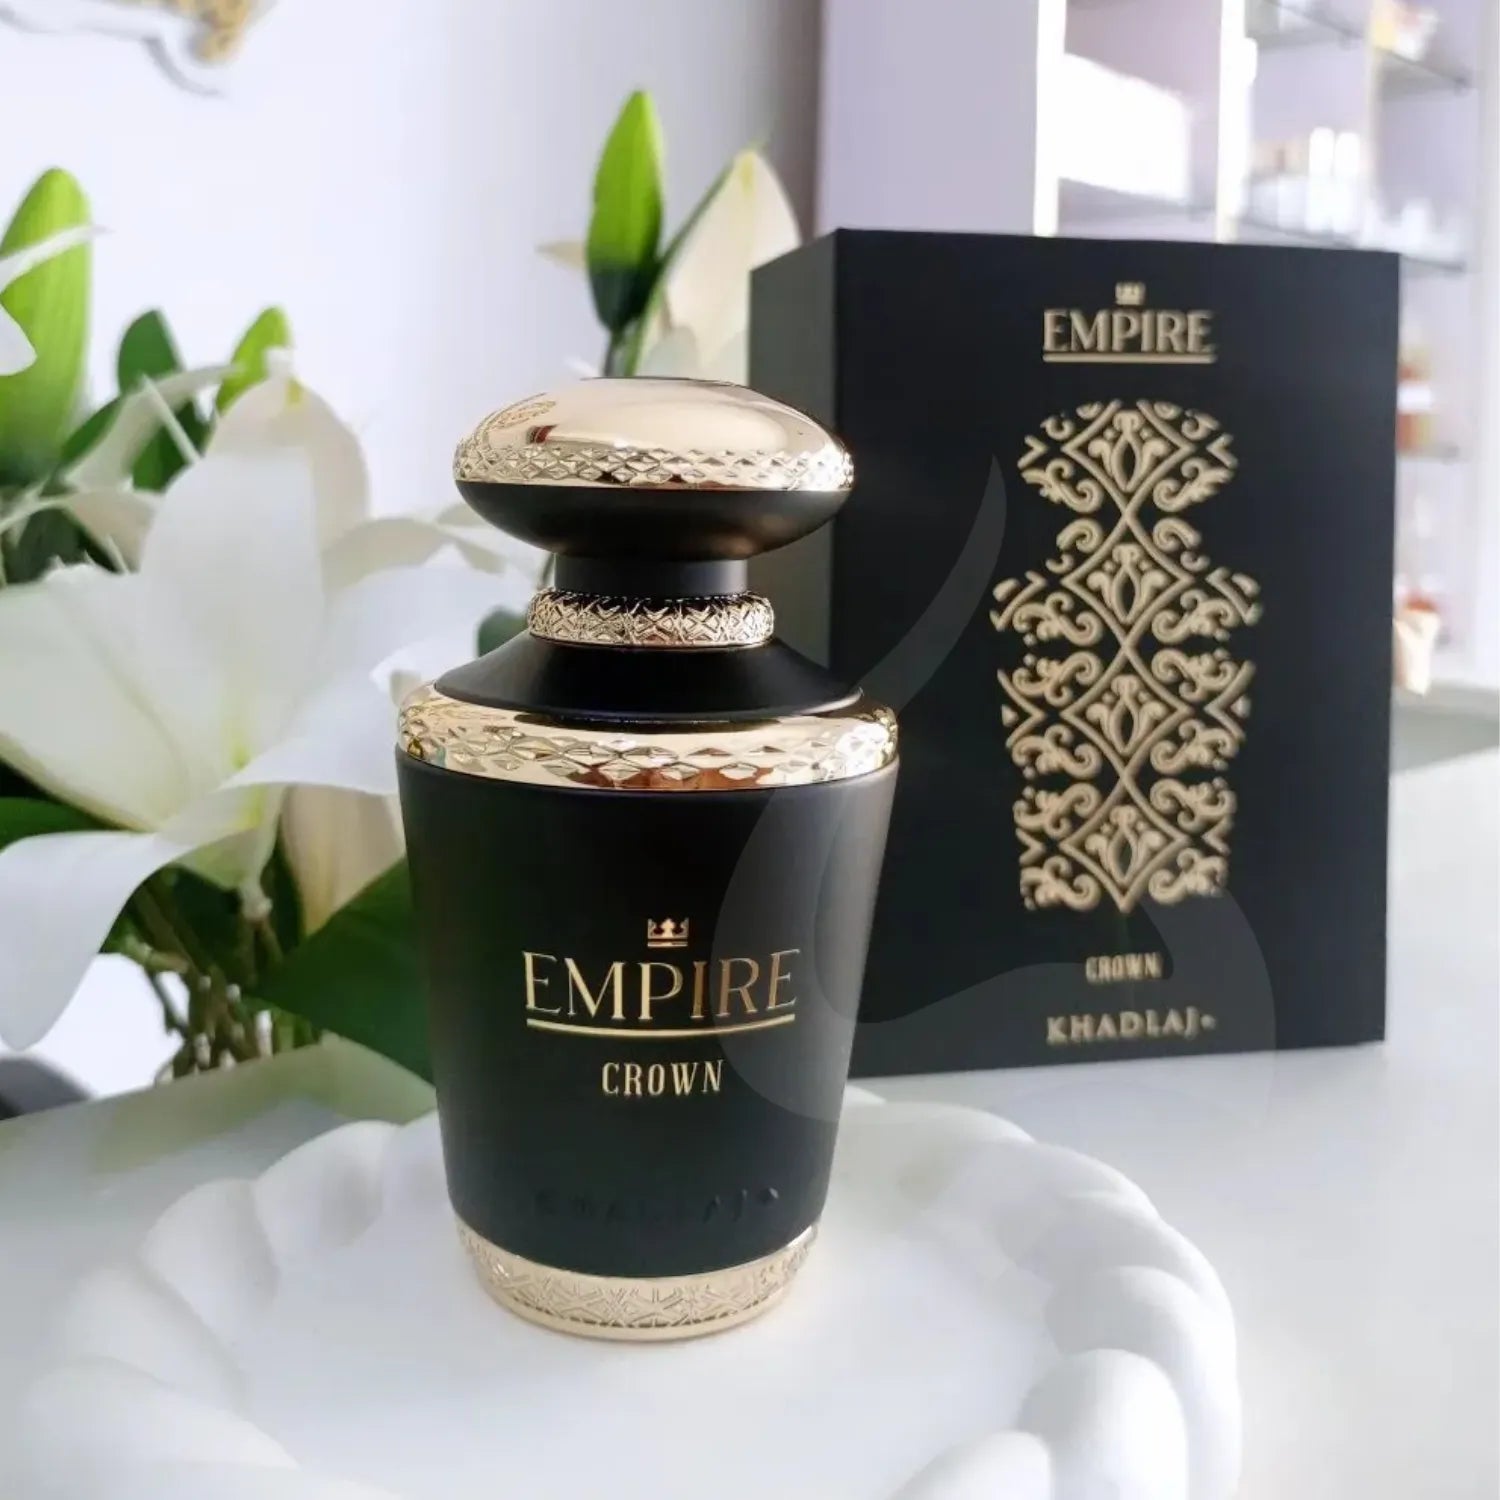 Empire Crown Perfume Photo